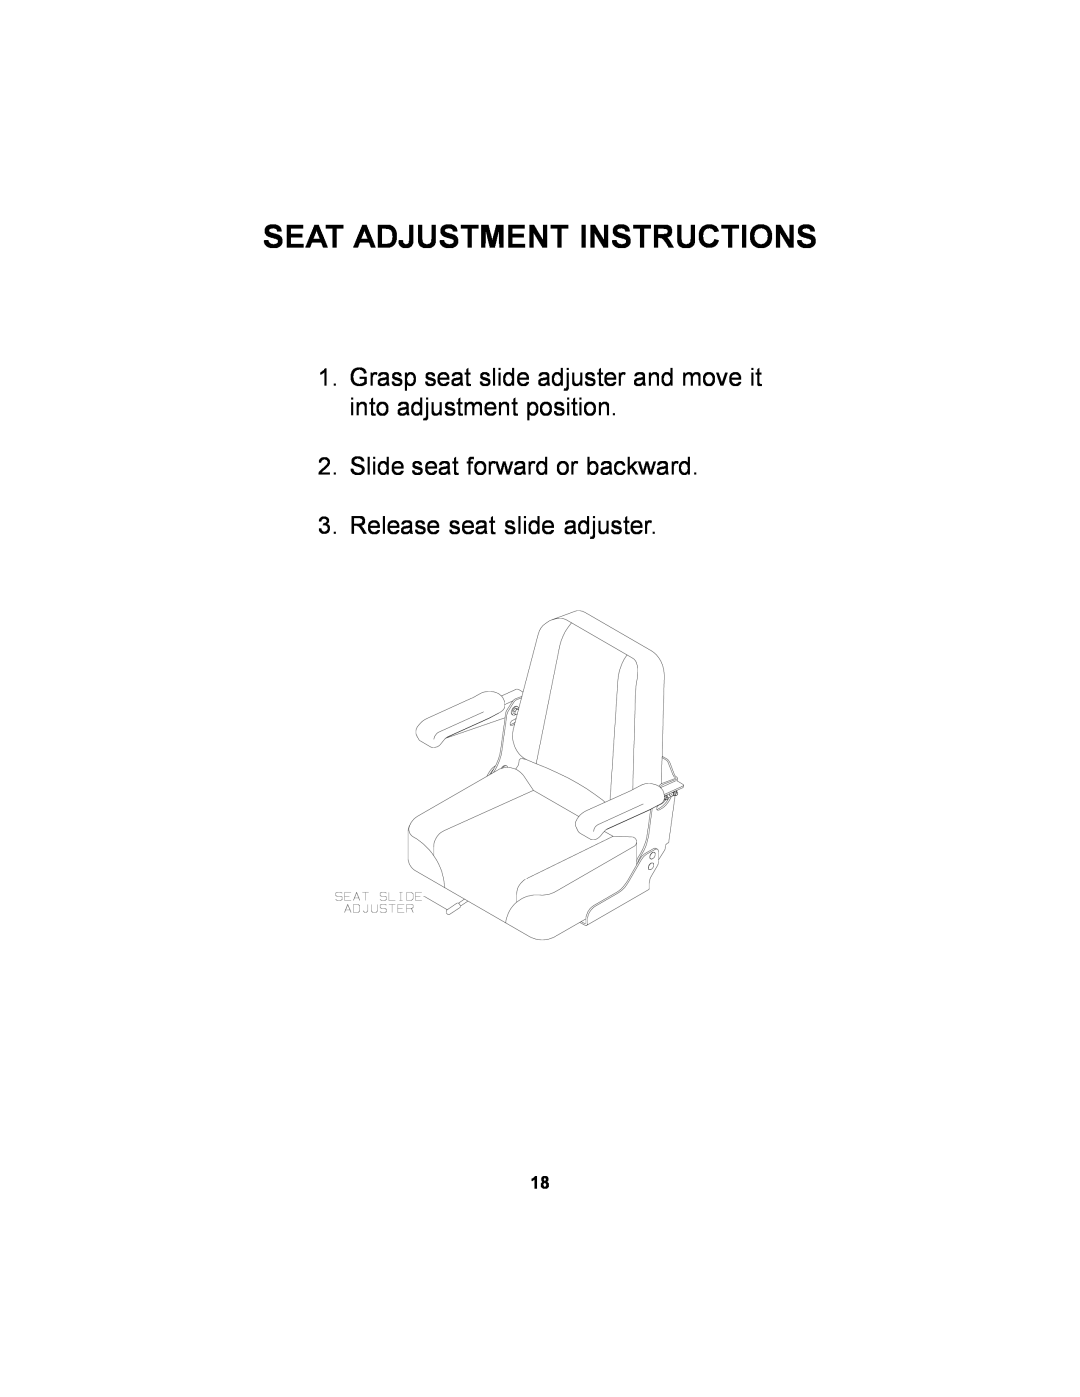 Dixon ELS 60 manual Seat Adjustment Instructions, Grasp seat slide adjuster and move it into adjustment position 